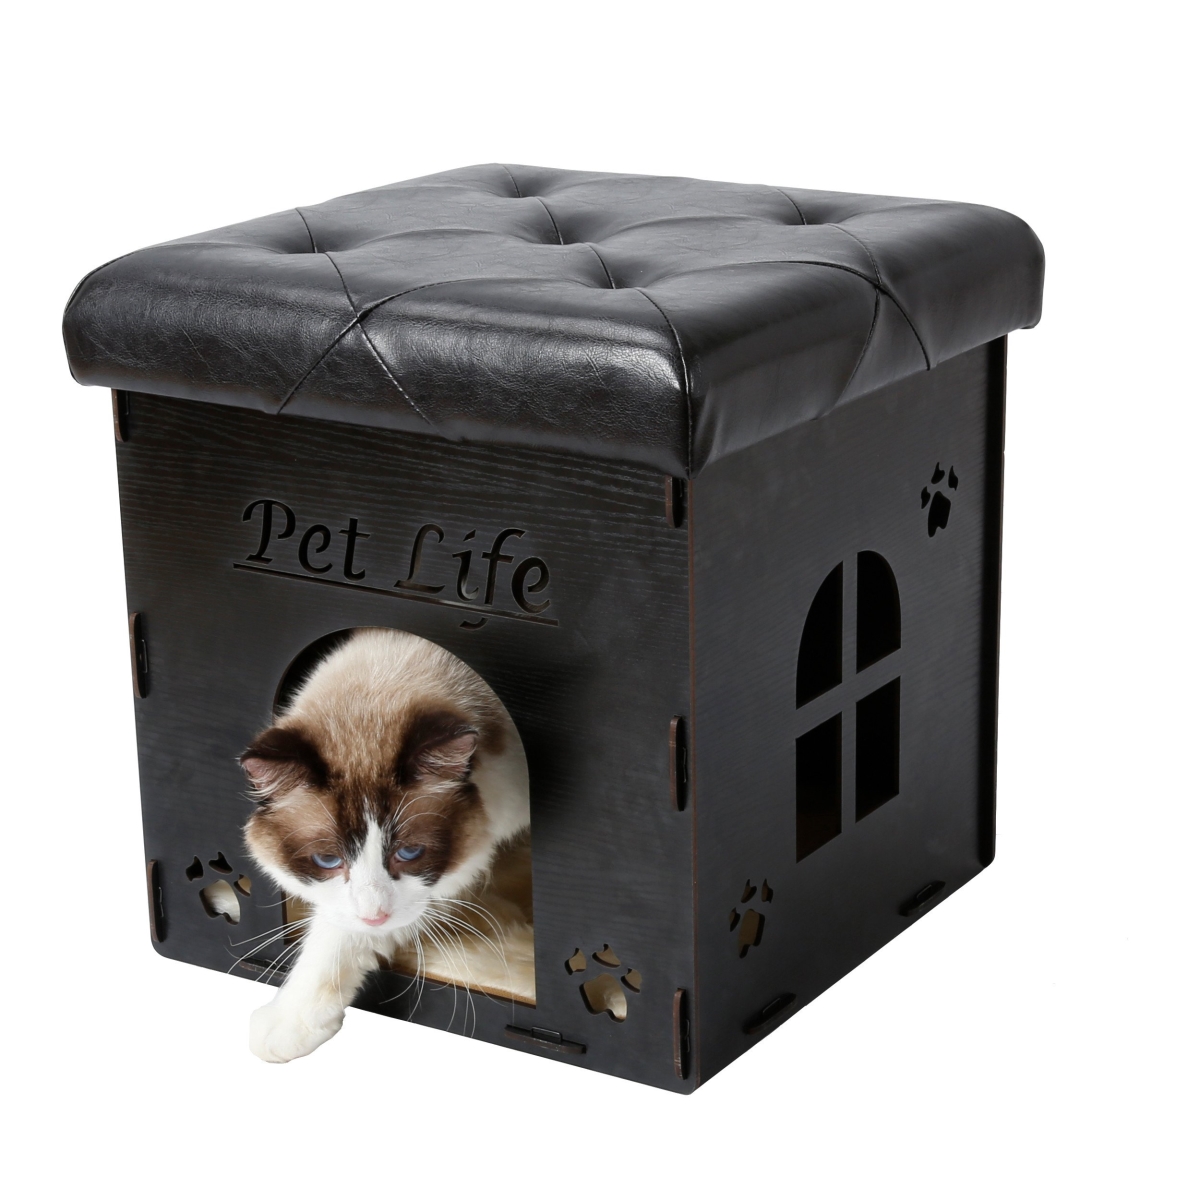 Pet Life Fn1bkmd Foldaway Collapsible Designer Cat House Furniture Bench, Black - One Size